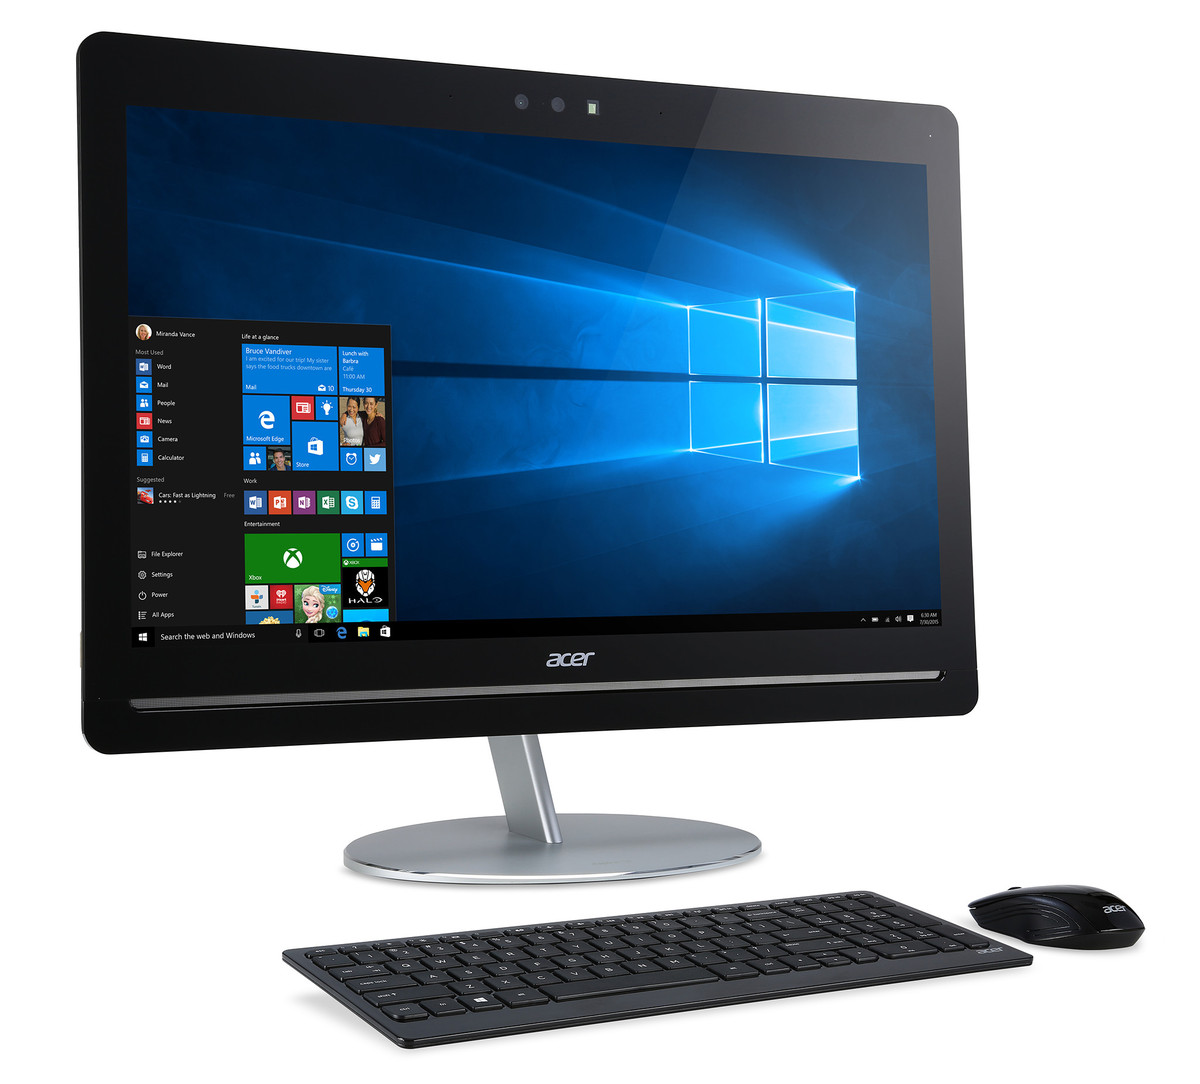 Acer Aspire U5 (U5-710) - моноблок с 3D-камерой